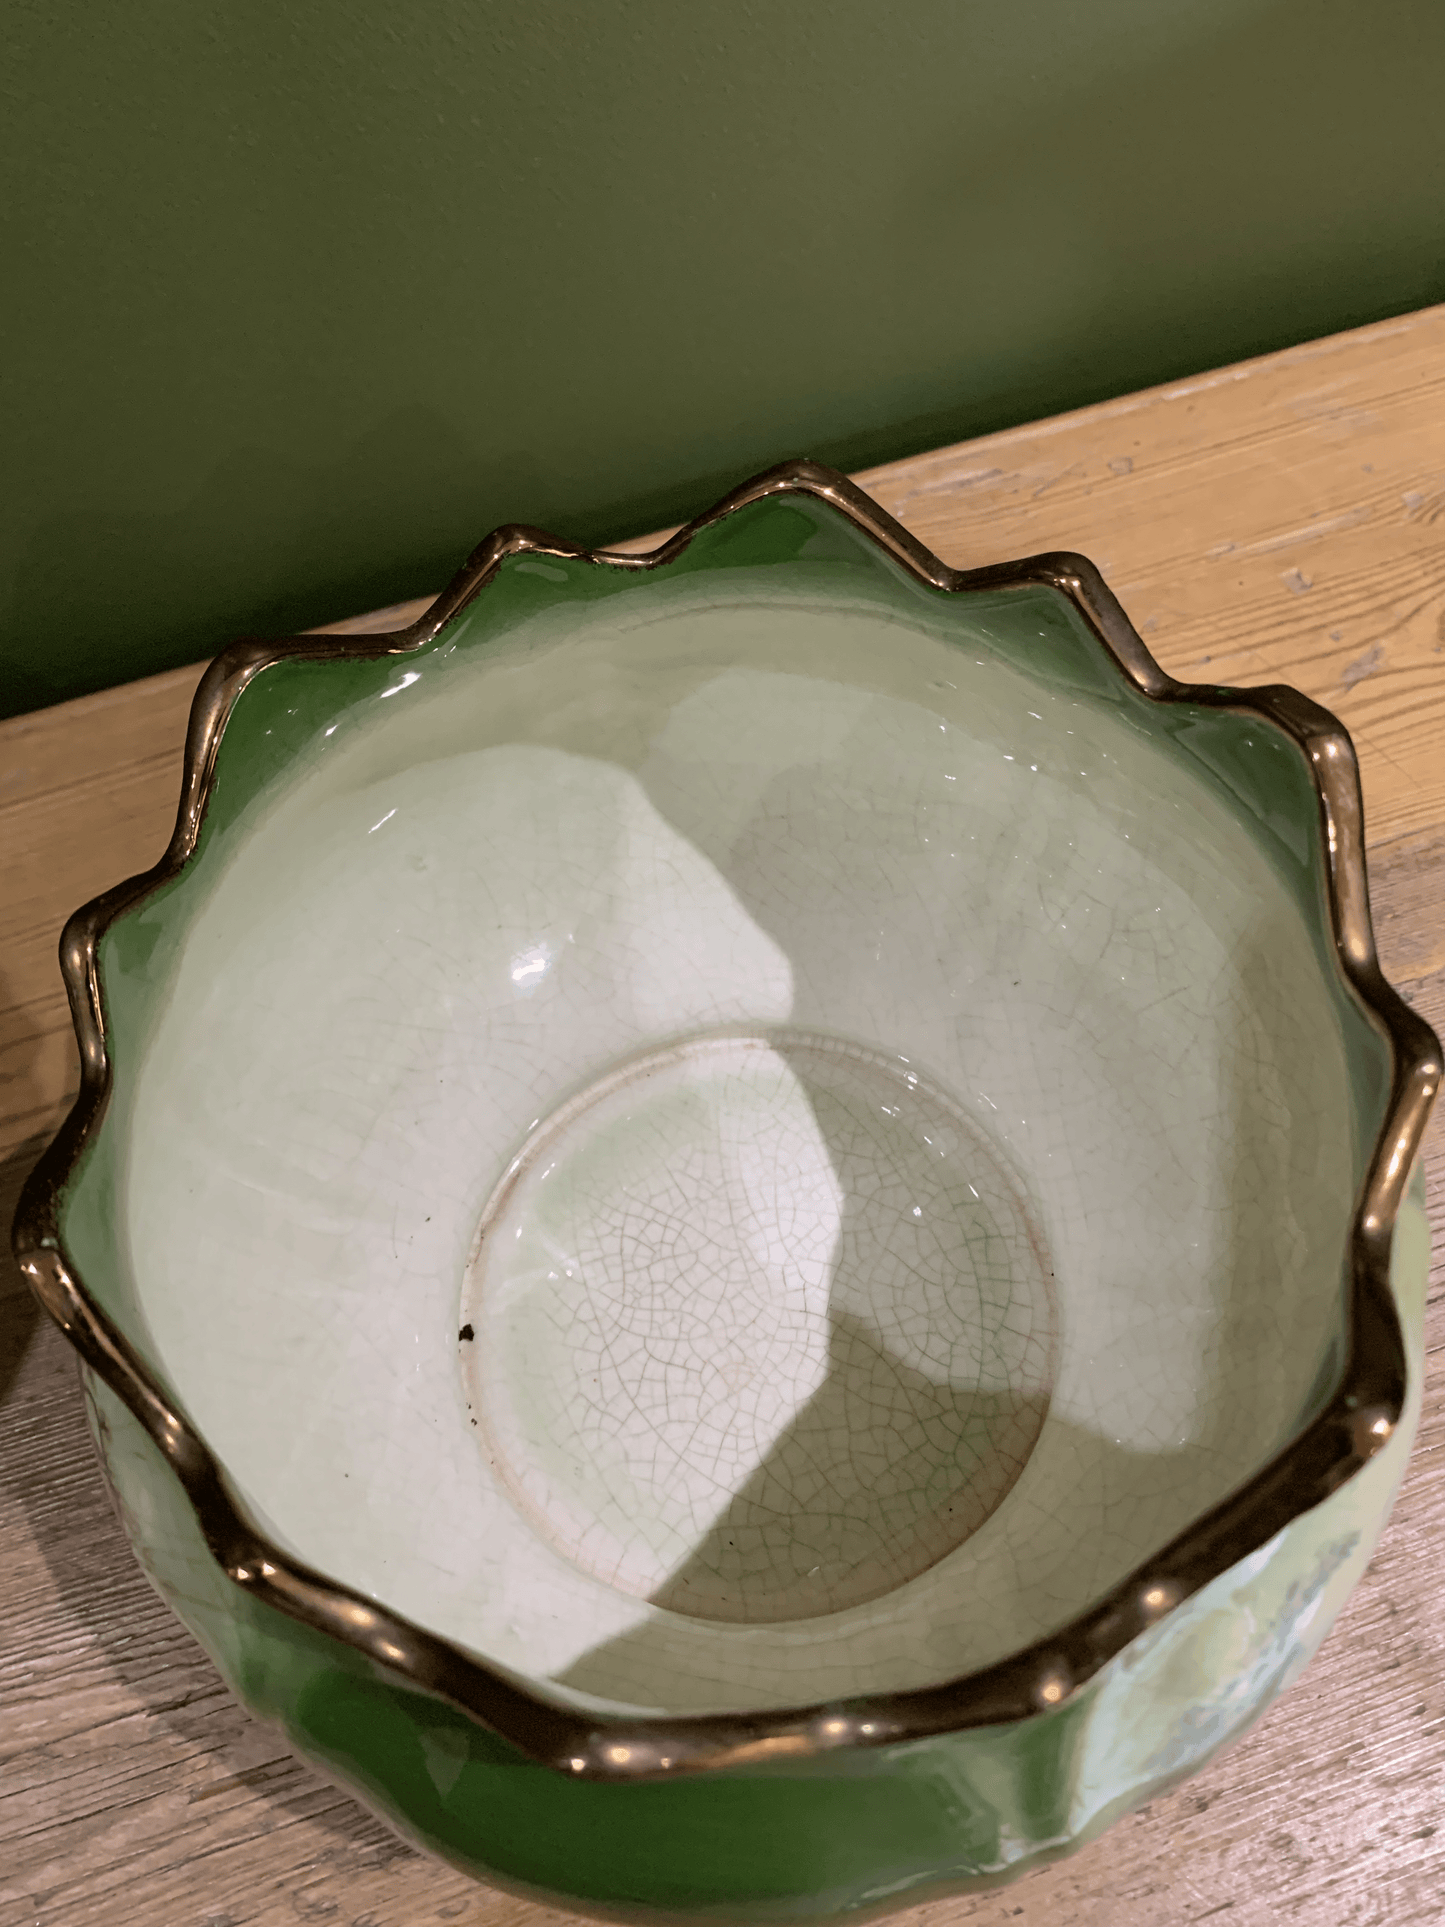 Antique Indoor Plant Pot: Timeless Elegance for Your Green Haven